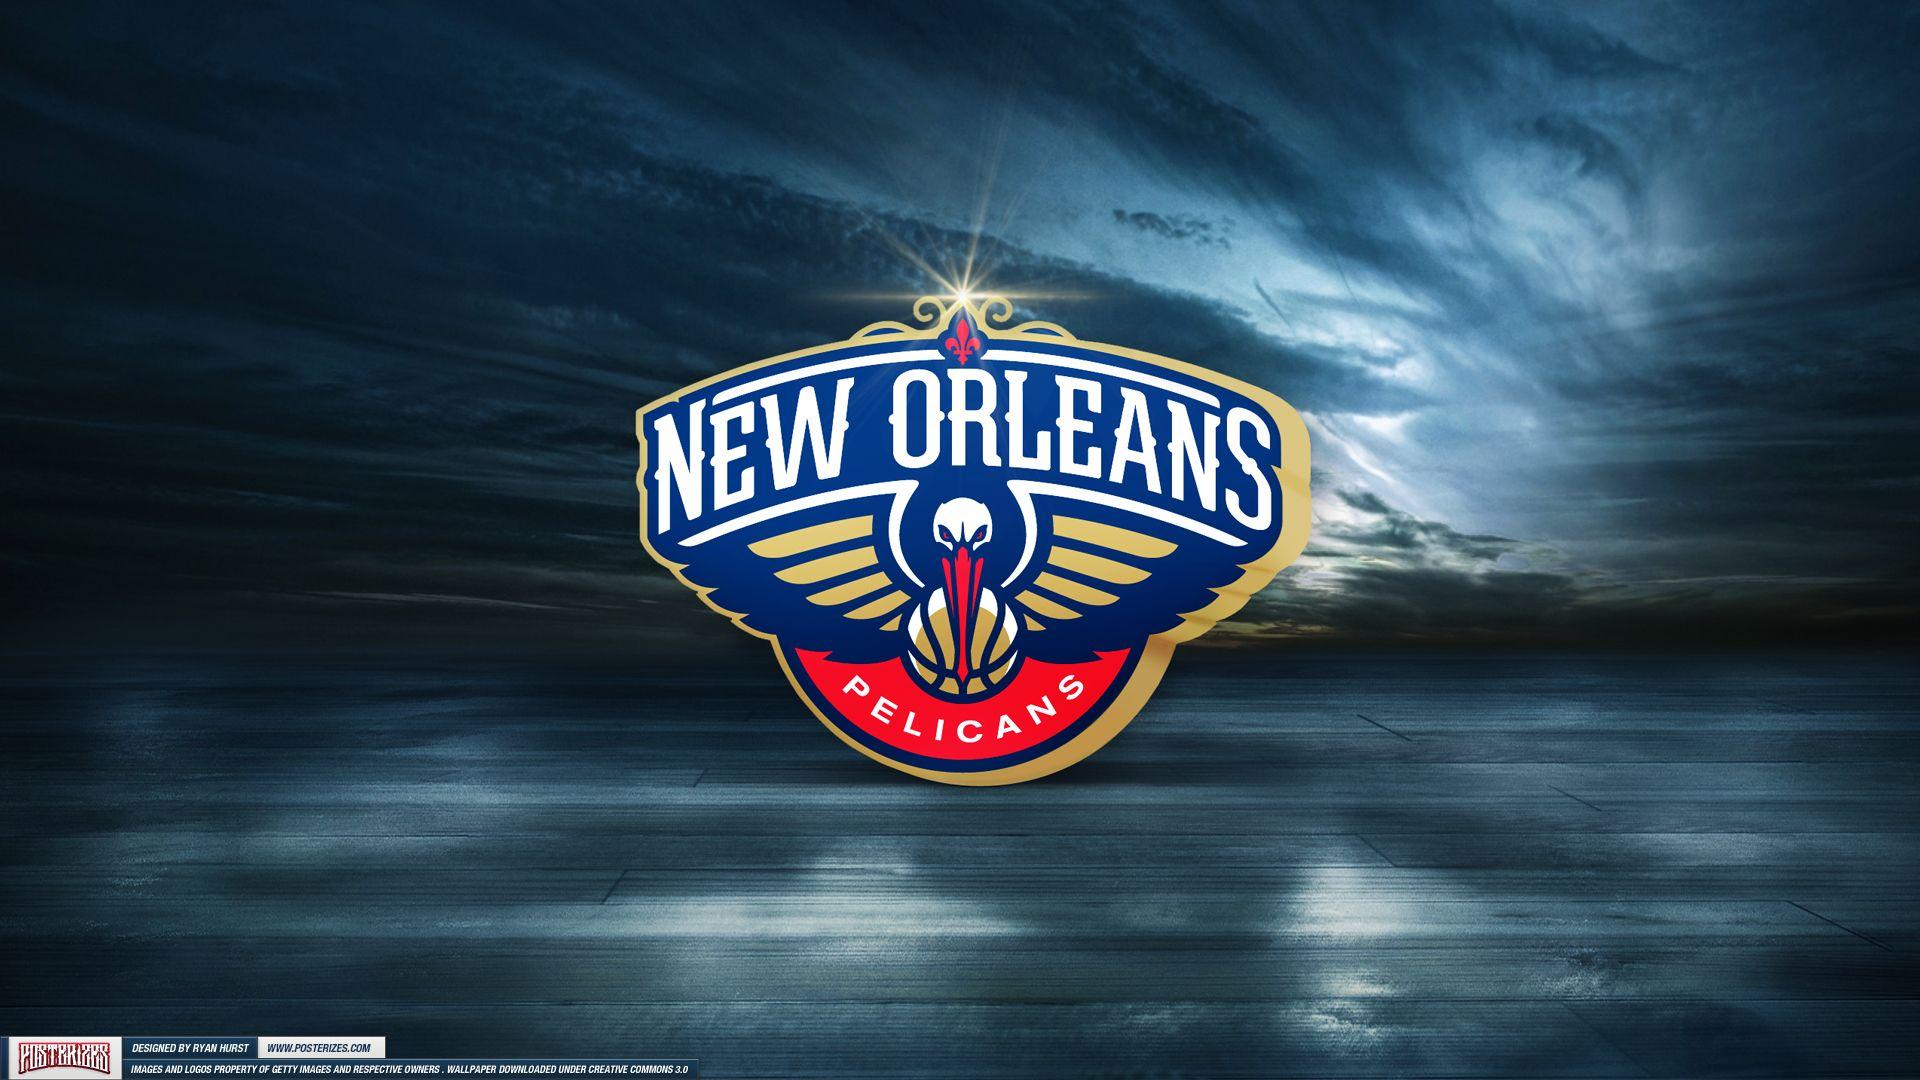 New Orleans Pelicans Wallpaper, Amazing New Orleans Pelicans